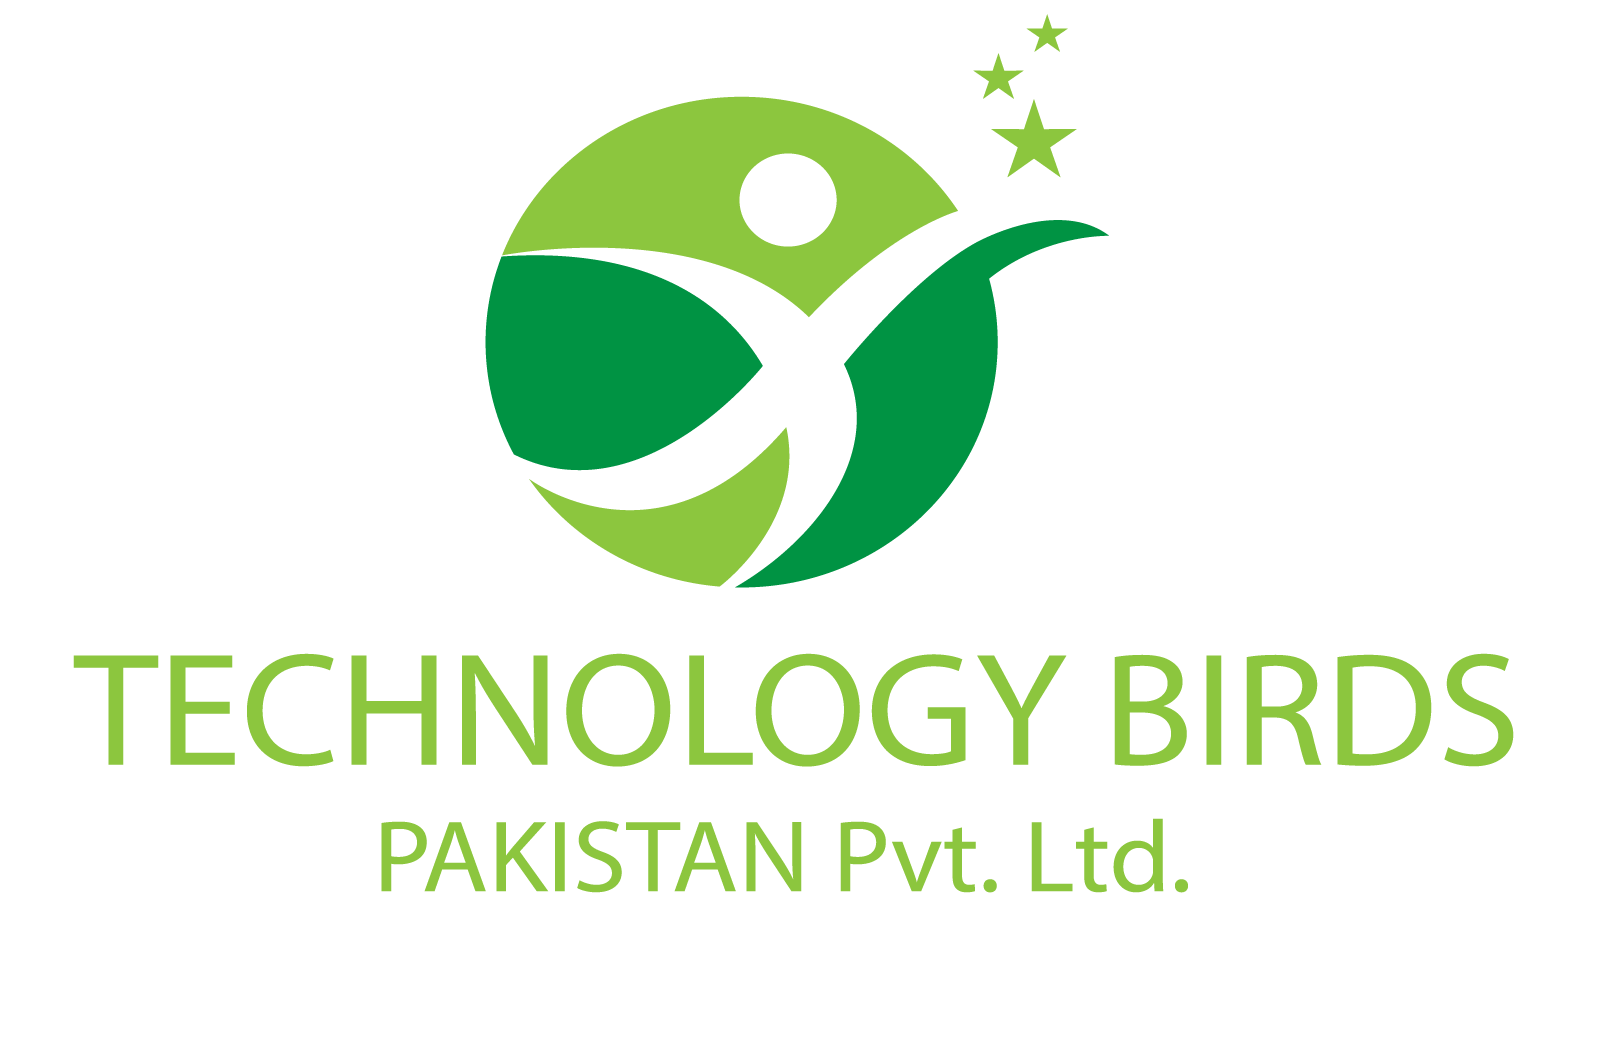 https://www.pakpositions.com/company/technologybirds-pakistan-pvt-ltd